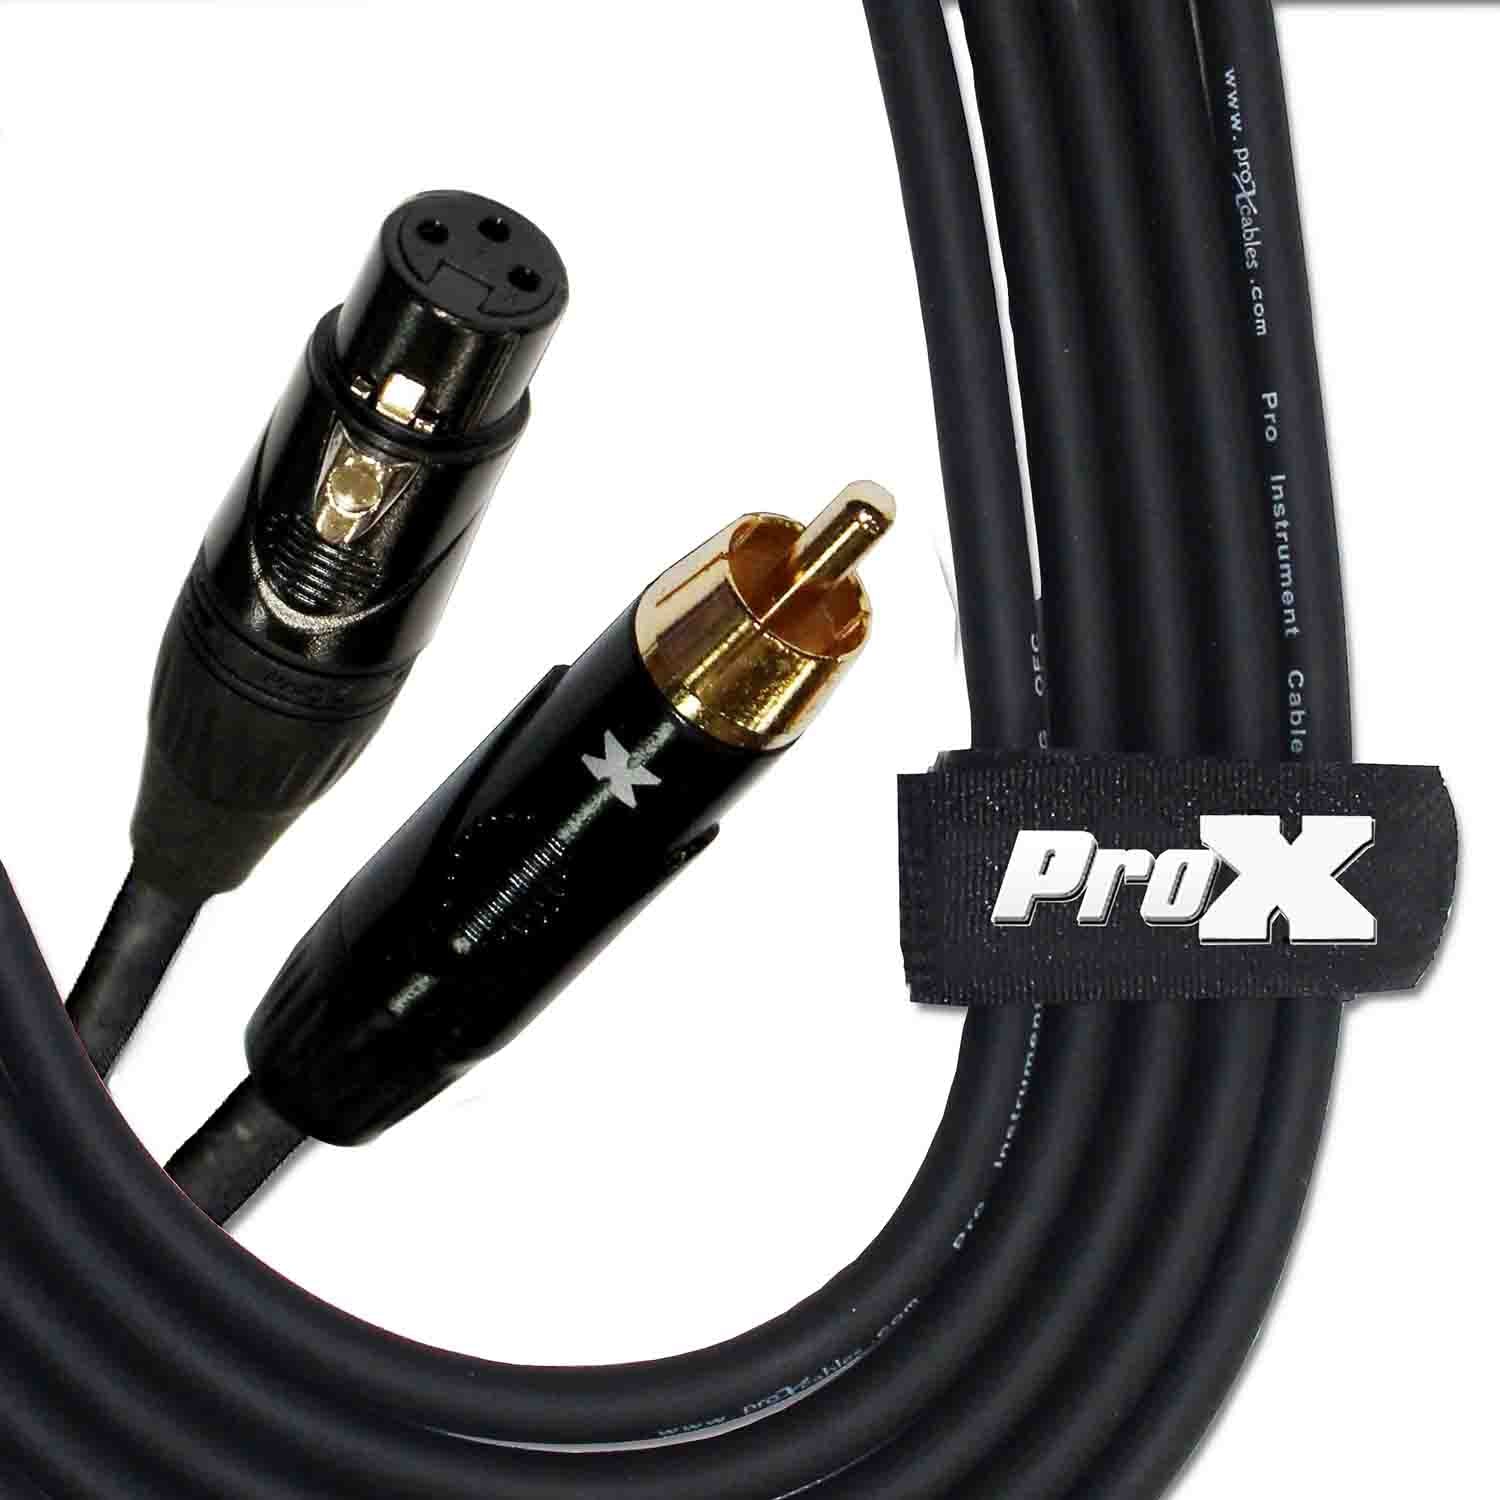 Prox XC-RXF50 Unbalanced RCA to XLR-F High Performance Audio Cable - 50 Feet - Hollywood DJ